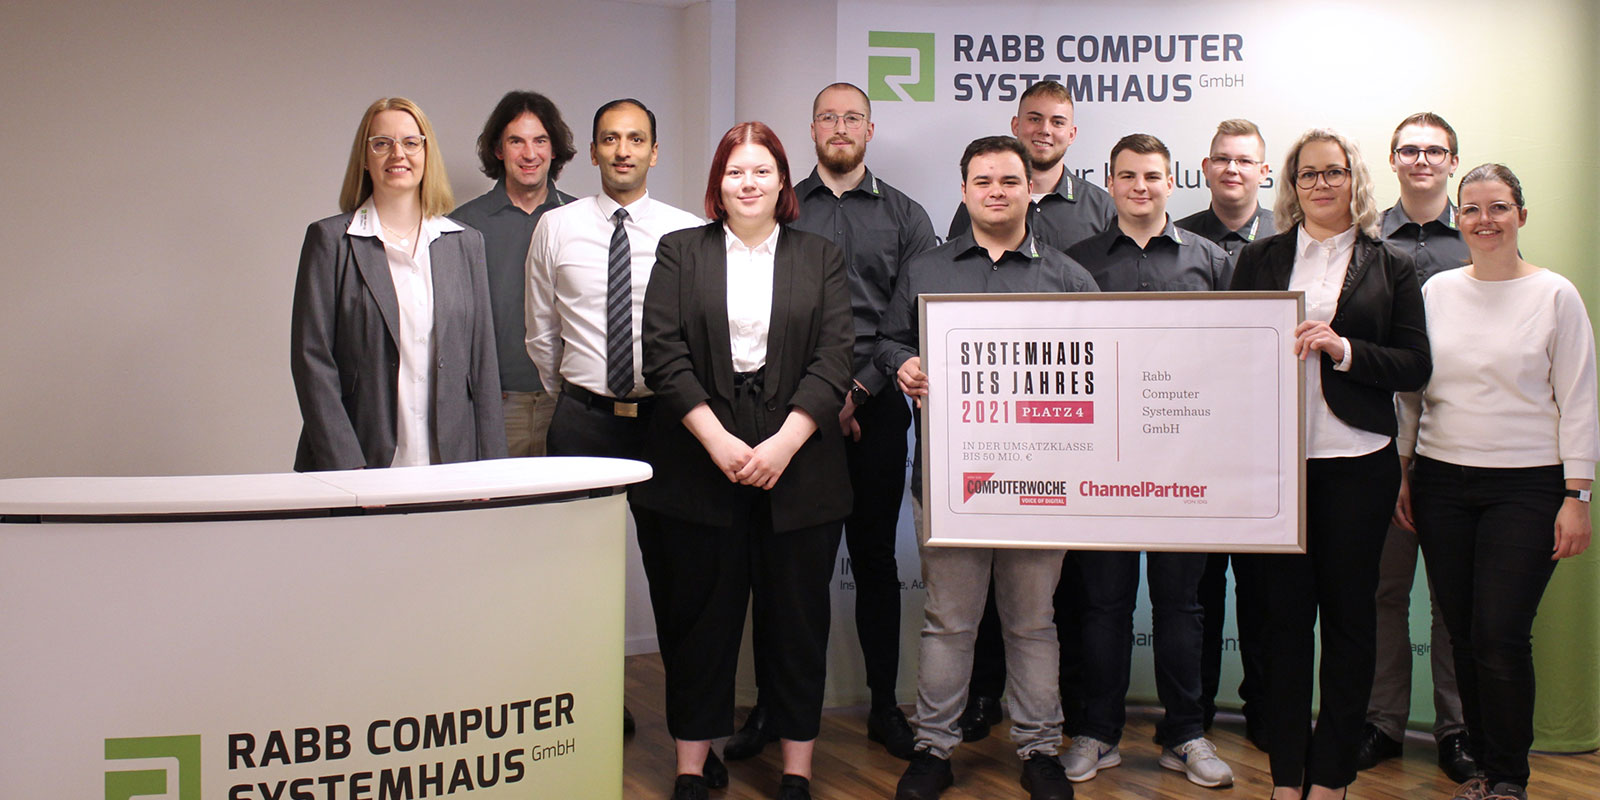 Rabb IT Solutions GmbH